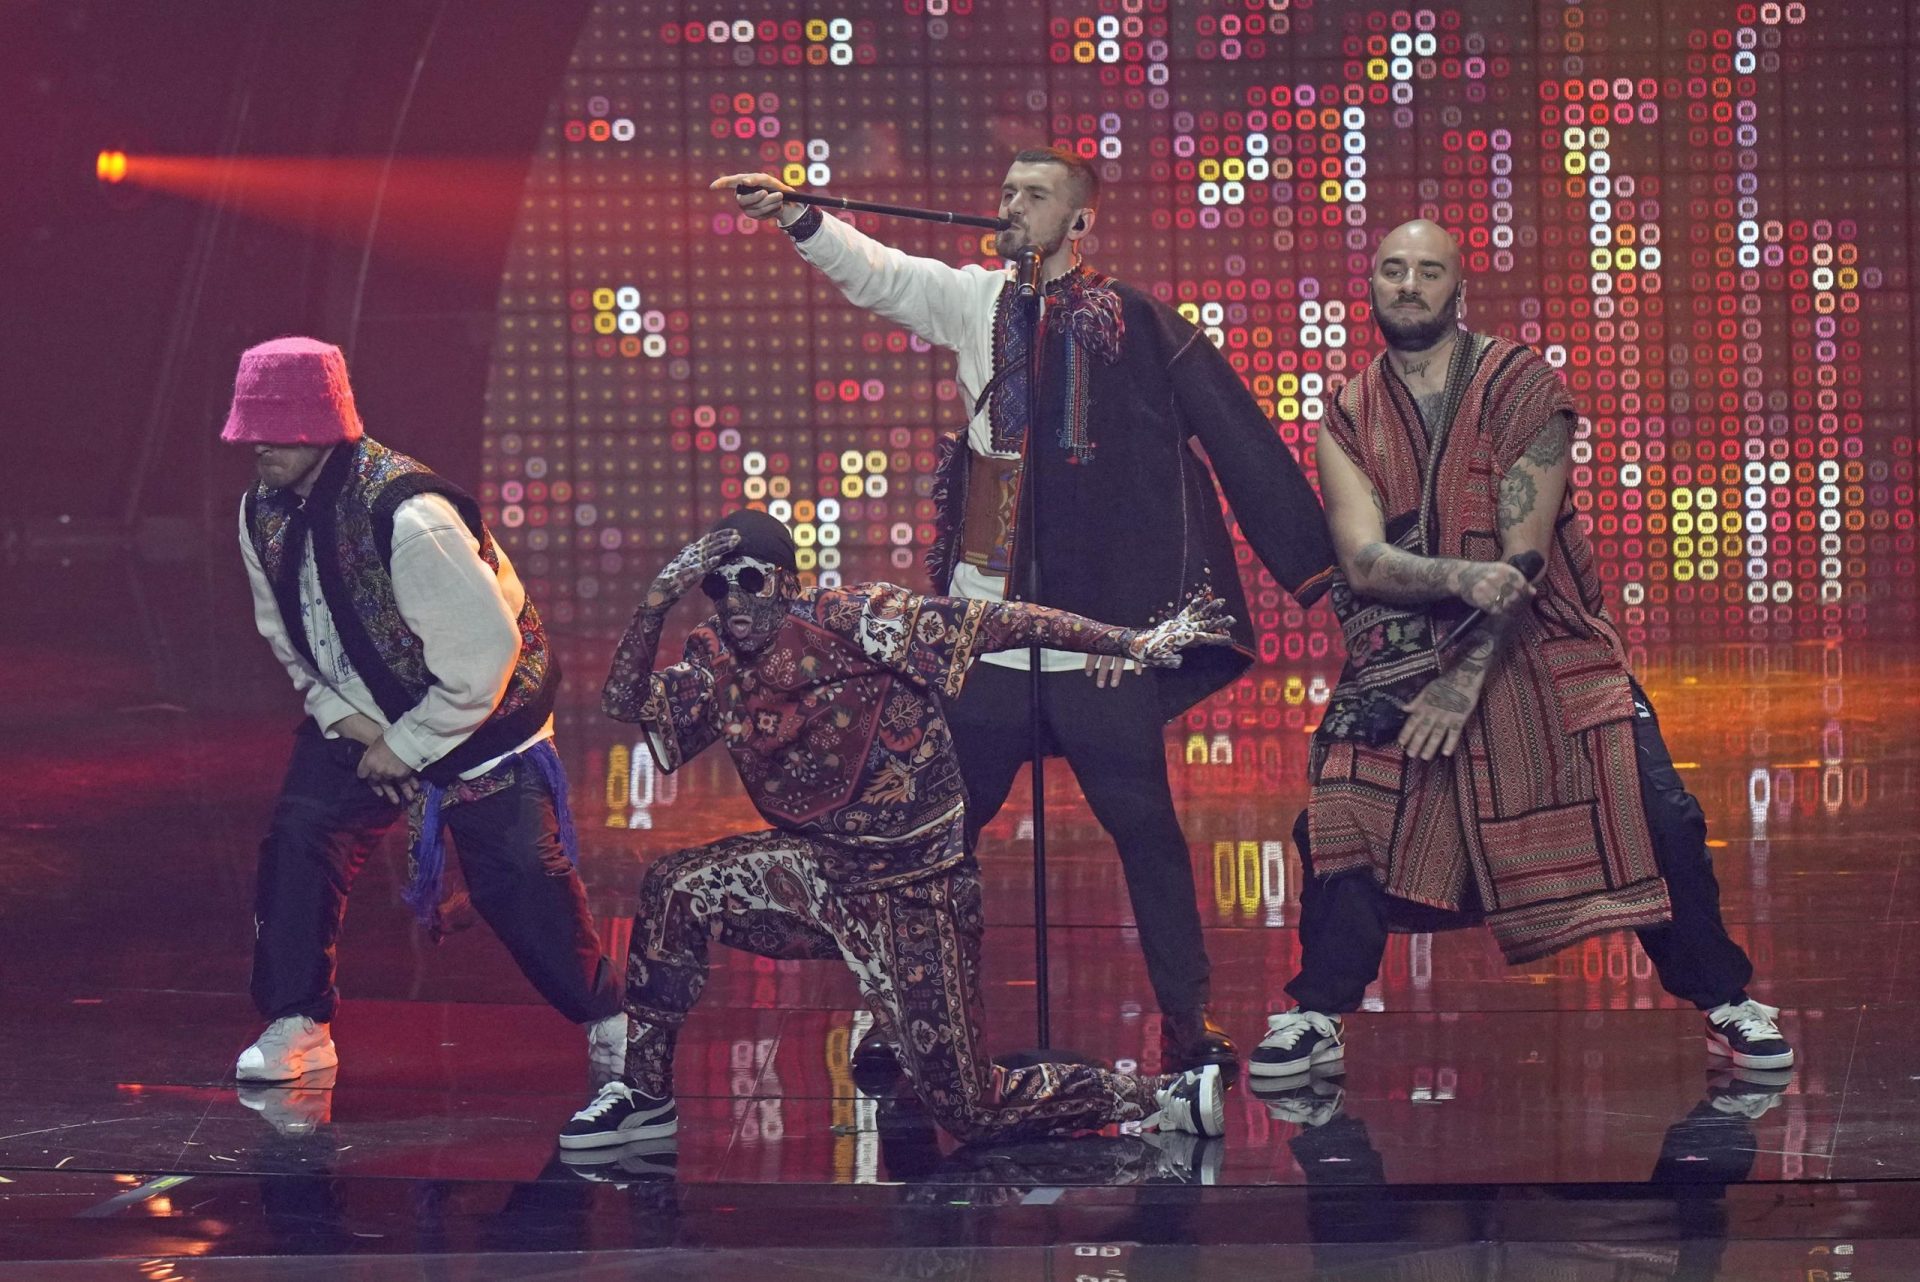 Gana Eurovisión en mano, banda ucraniana lanza nuevo video de guerra